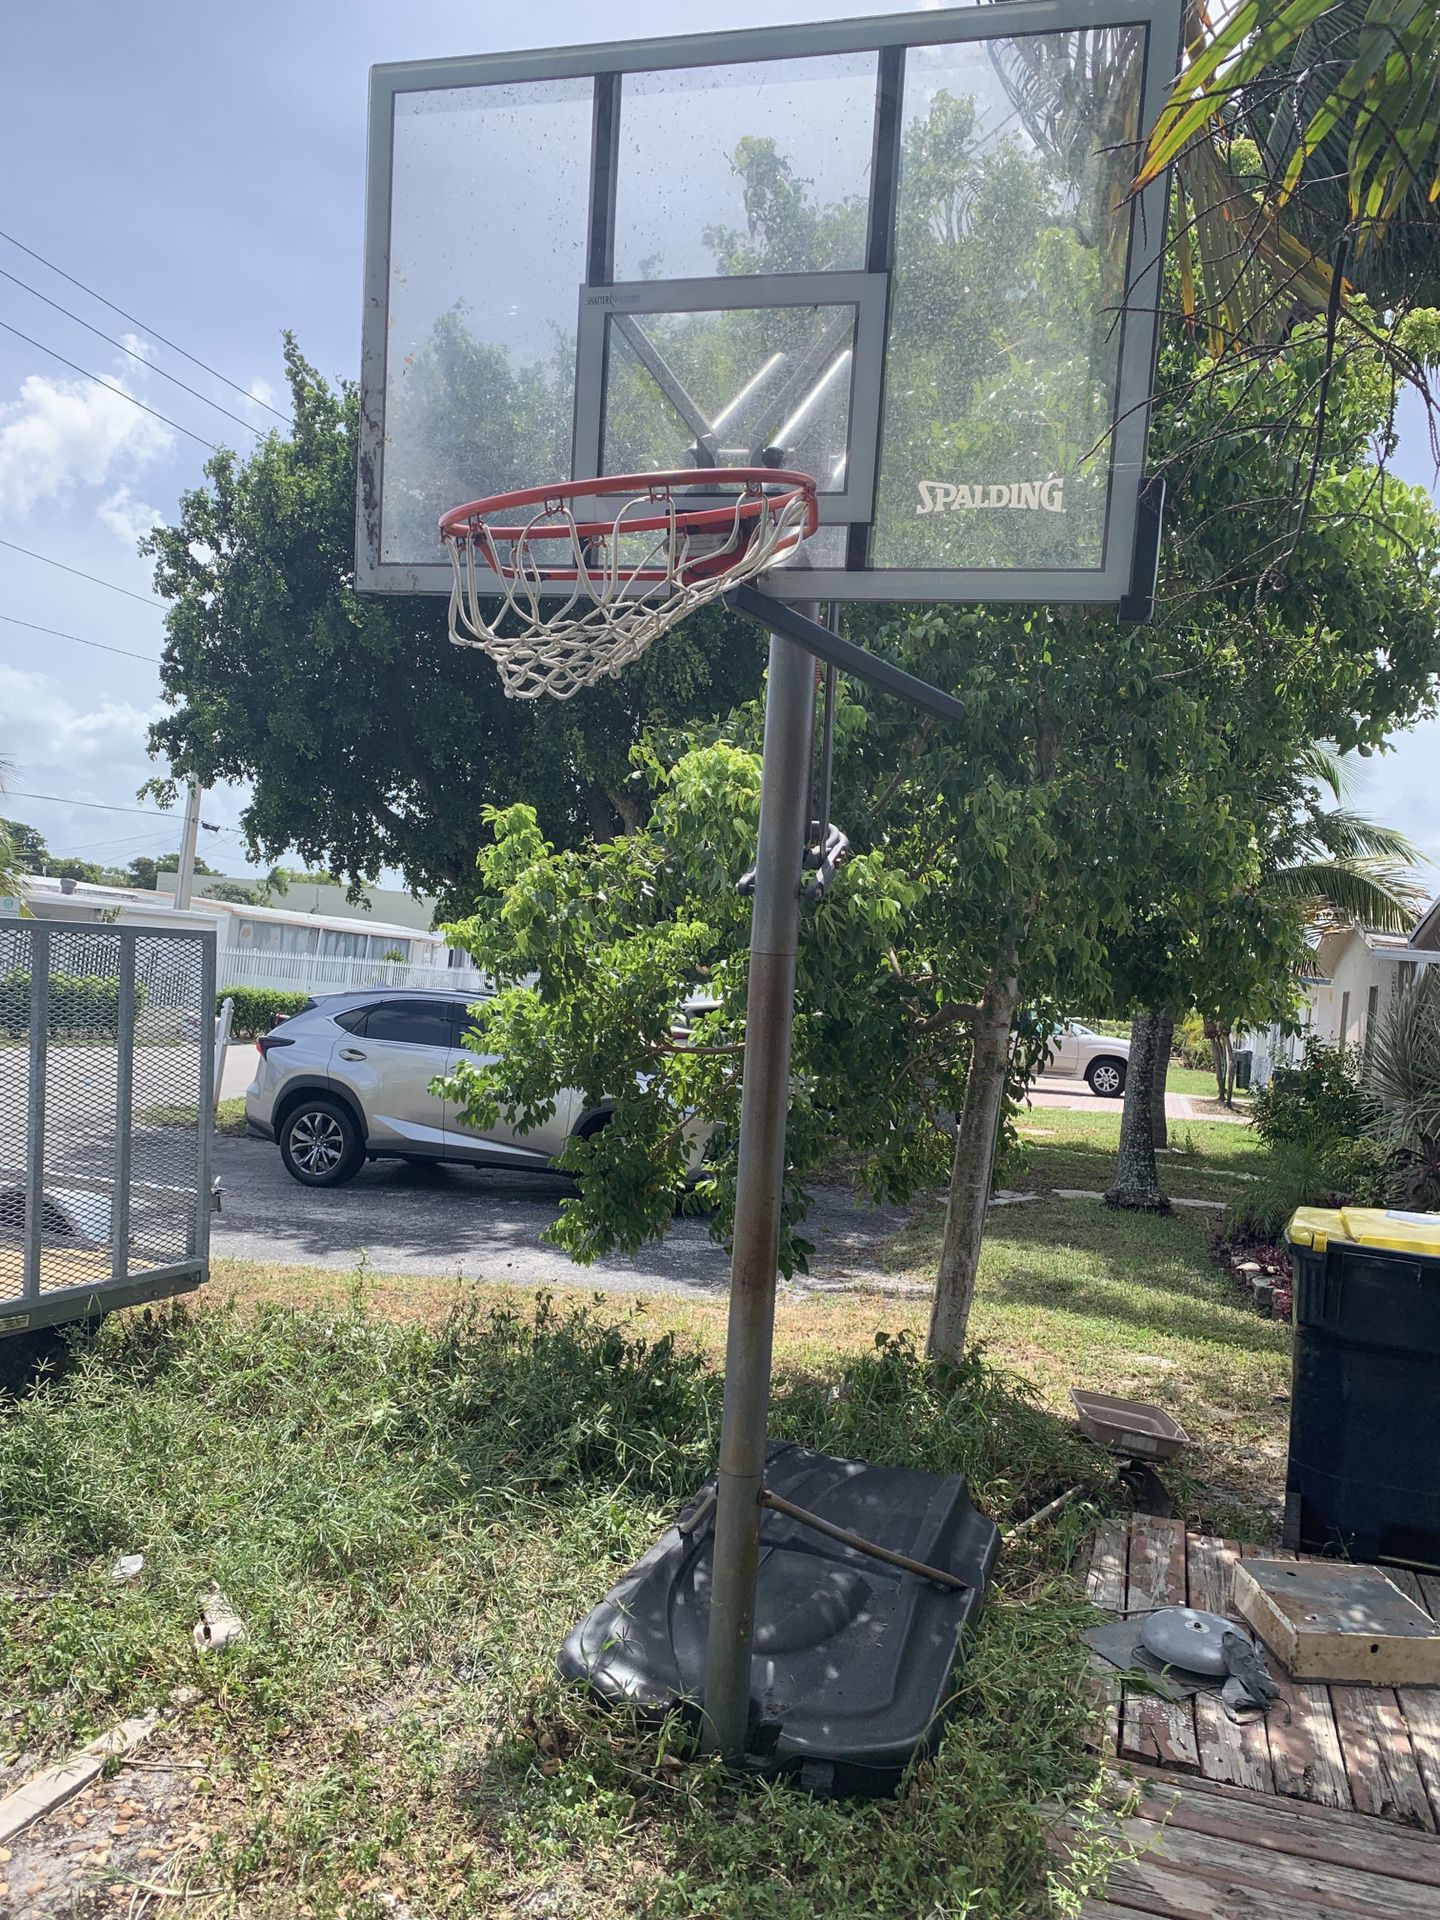 SPALDING Outdoor Basketball Hoop